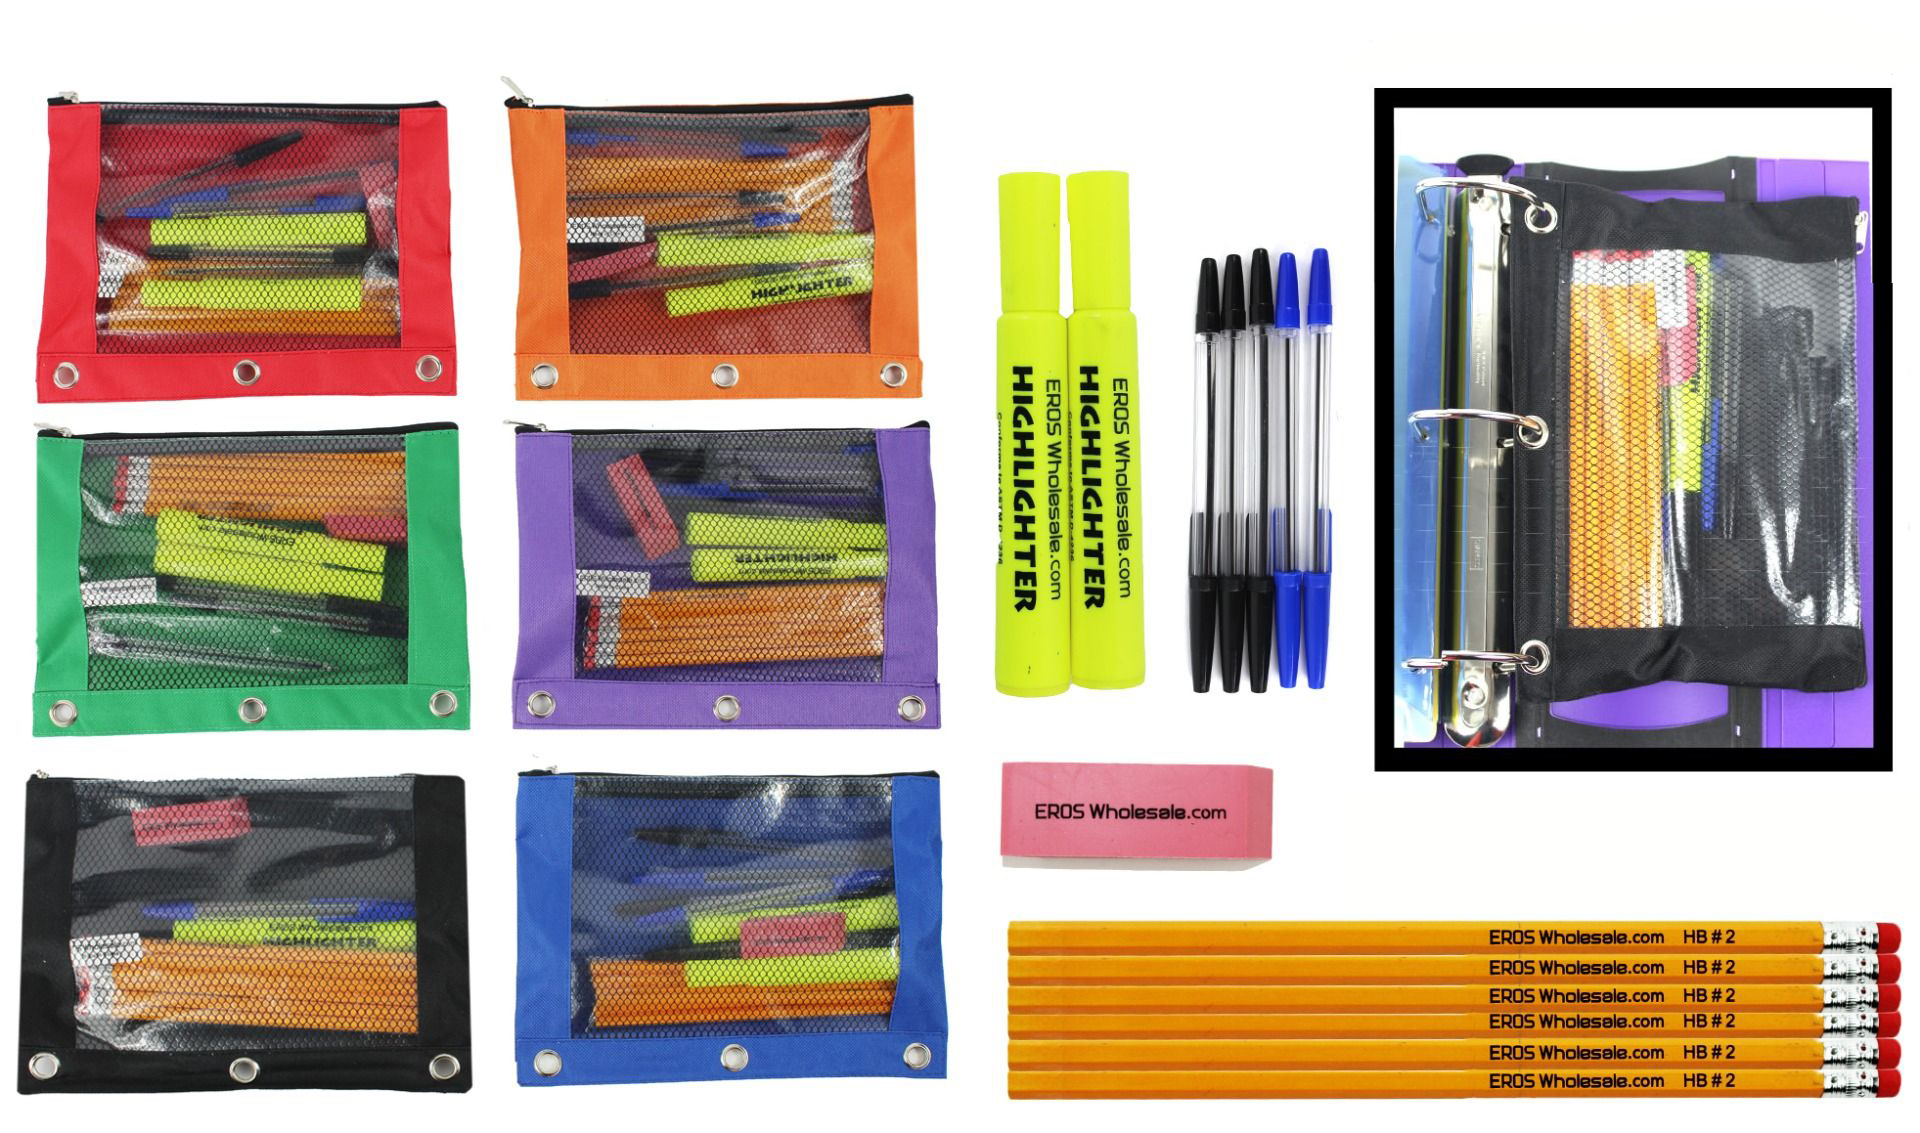 Buy Pencil Box - Bulk School Supplies Wholesale Case of 24 Pencil Boxe